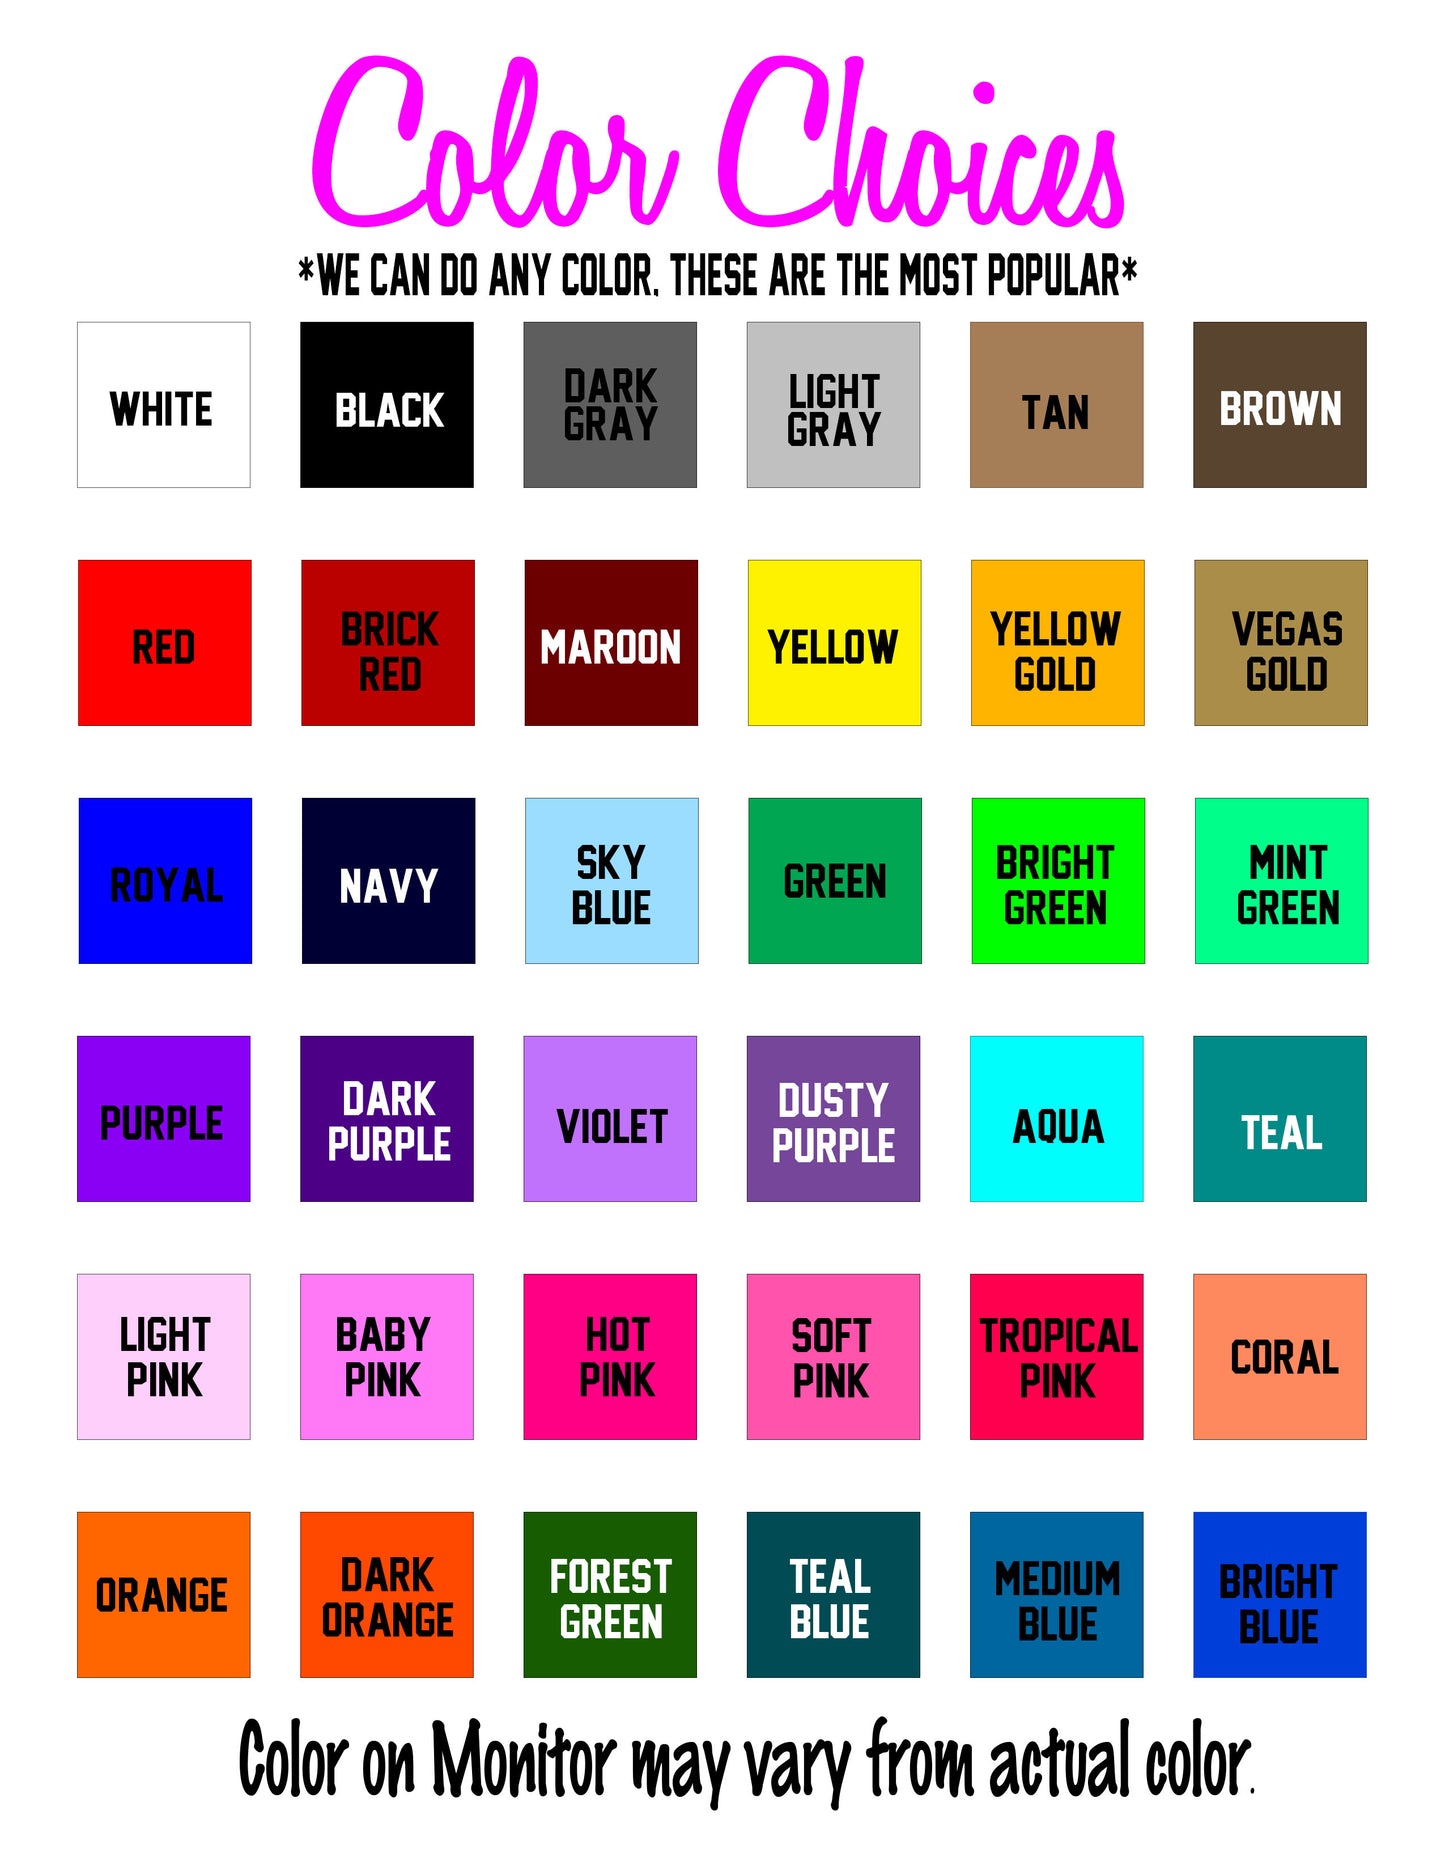 Personalized Rainbow Blanket, Plush Blanket